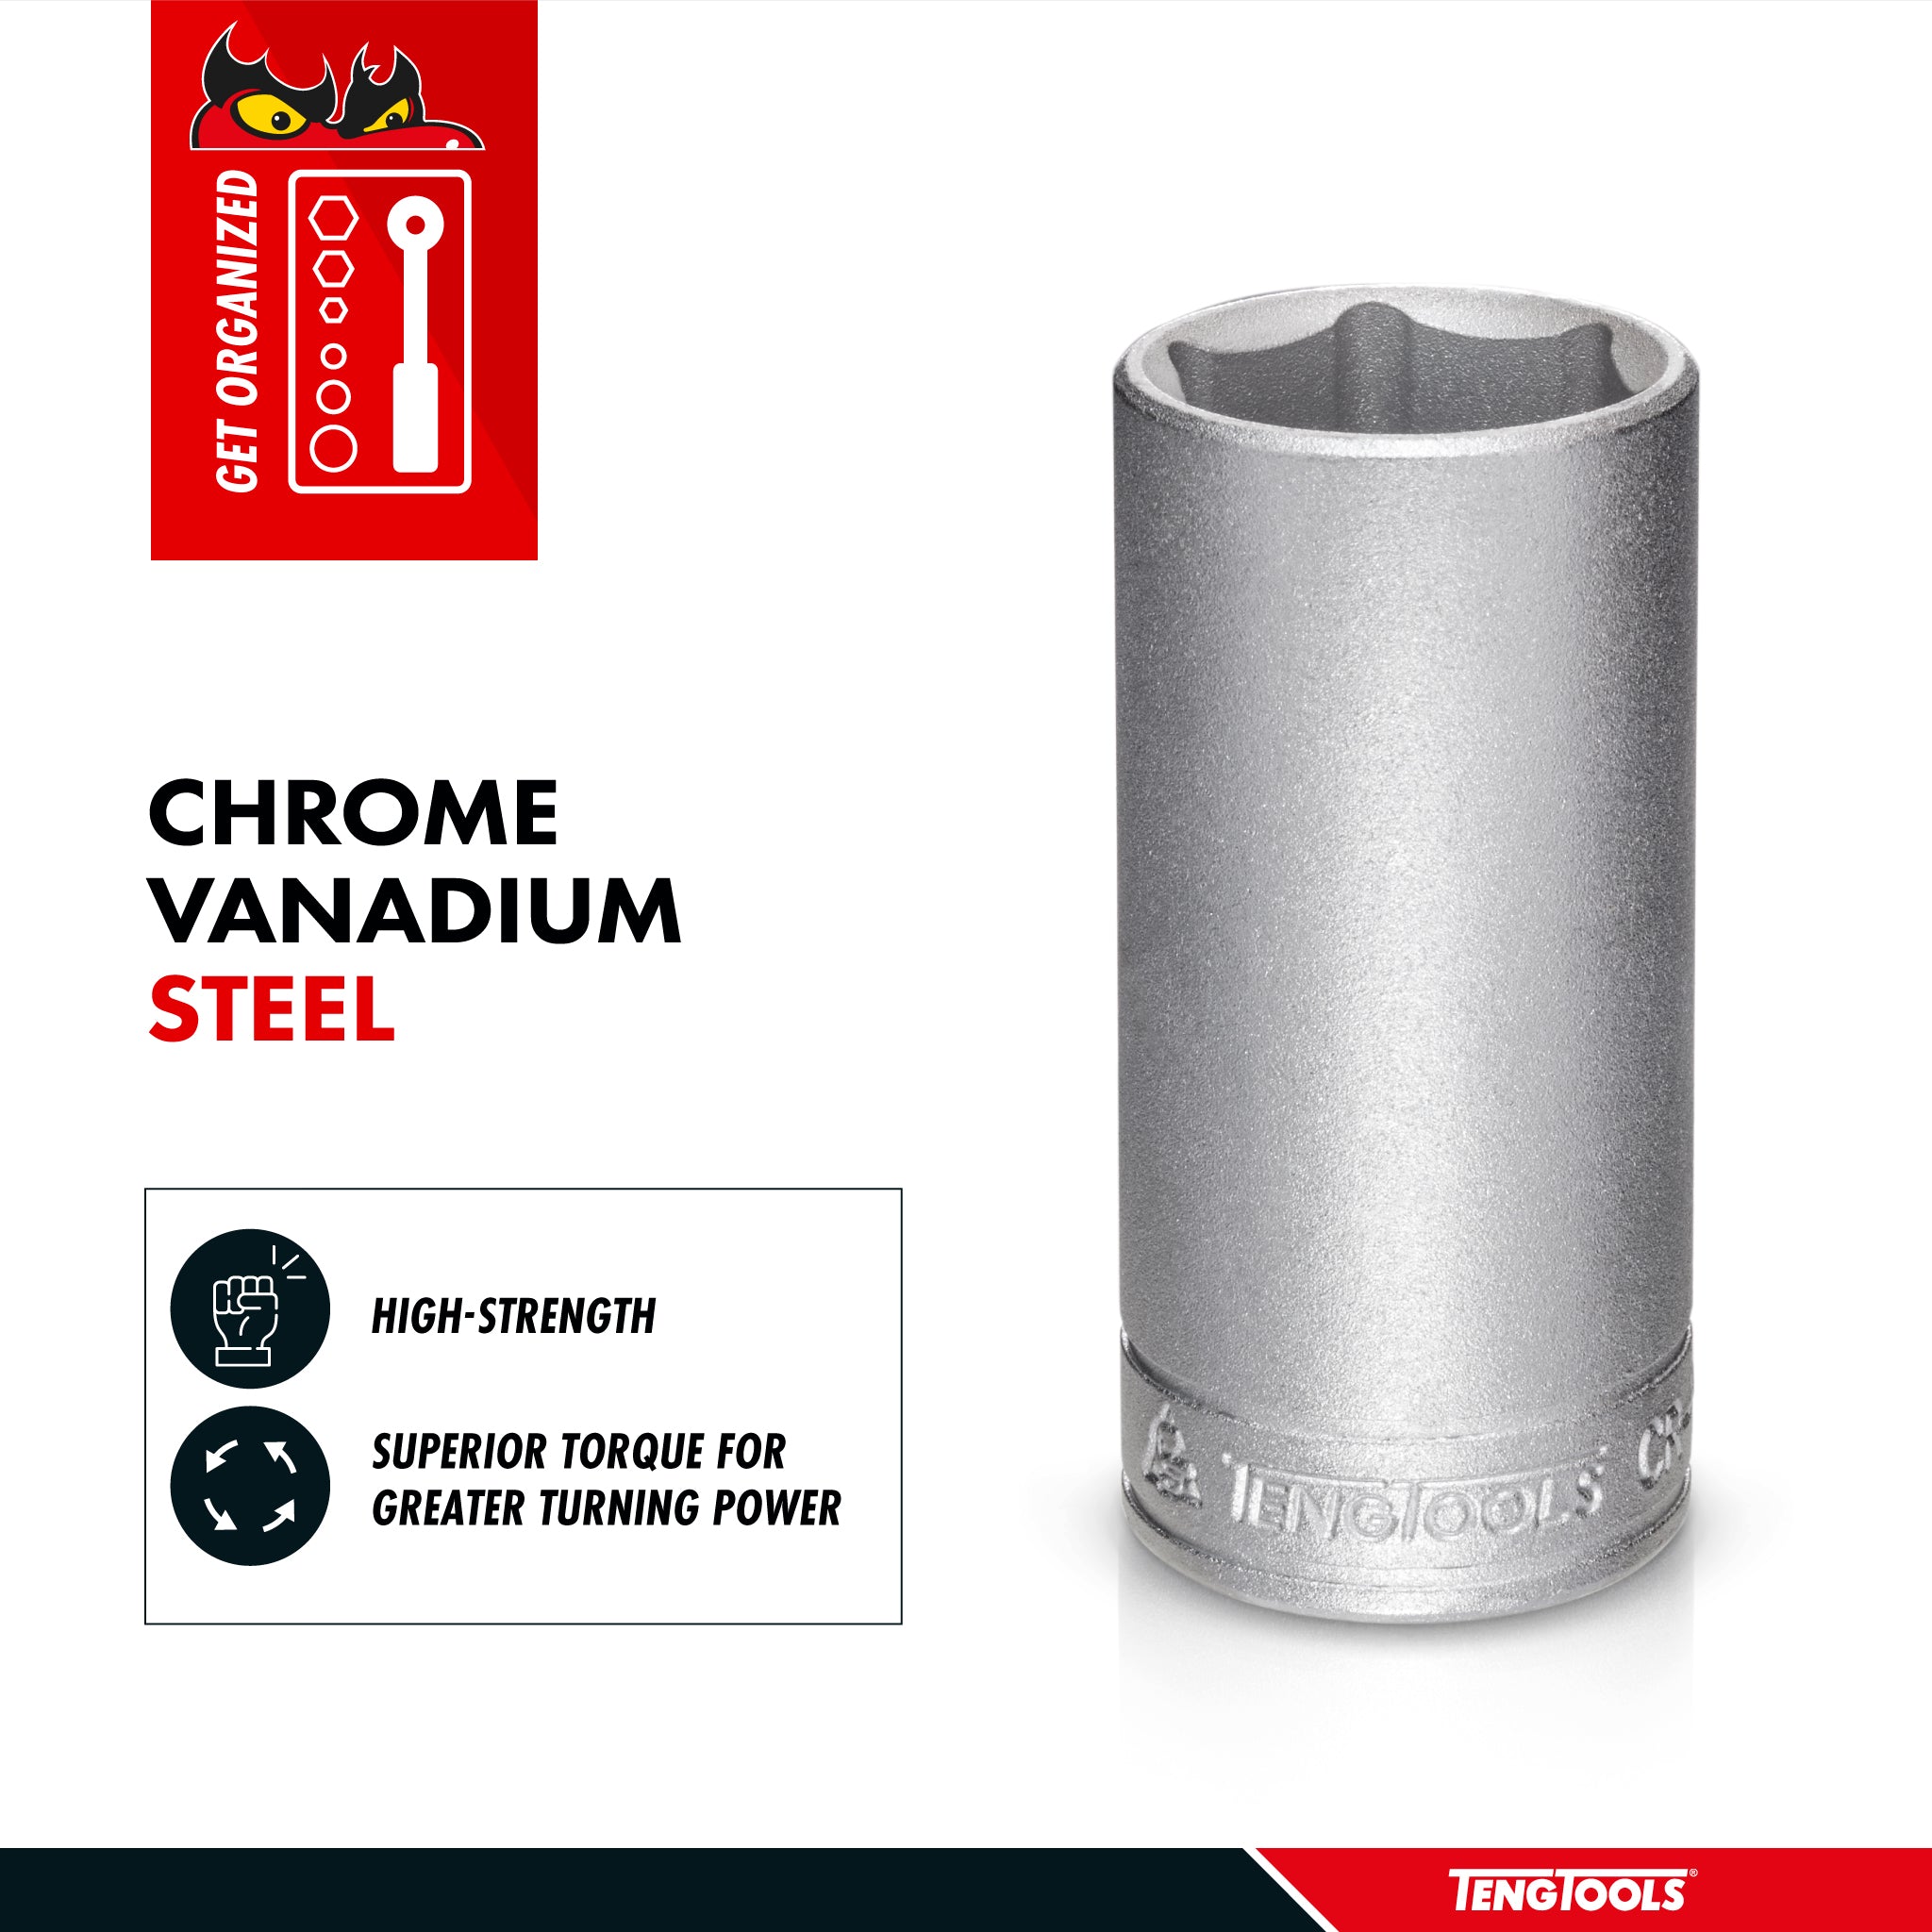 Teng Tools 6 Point SAE Deep 1/4 Inch Drive Chrome Vanadium Sockets - 9/32